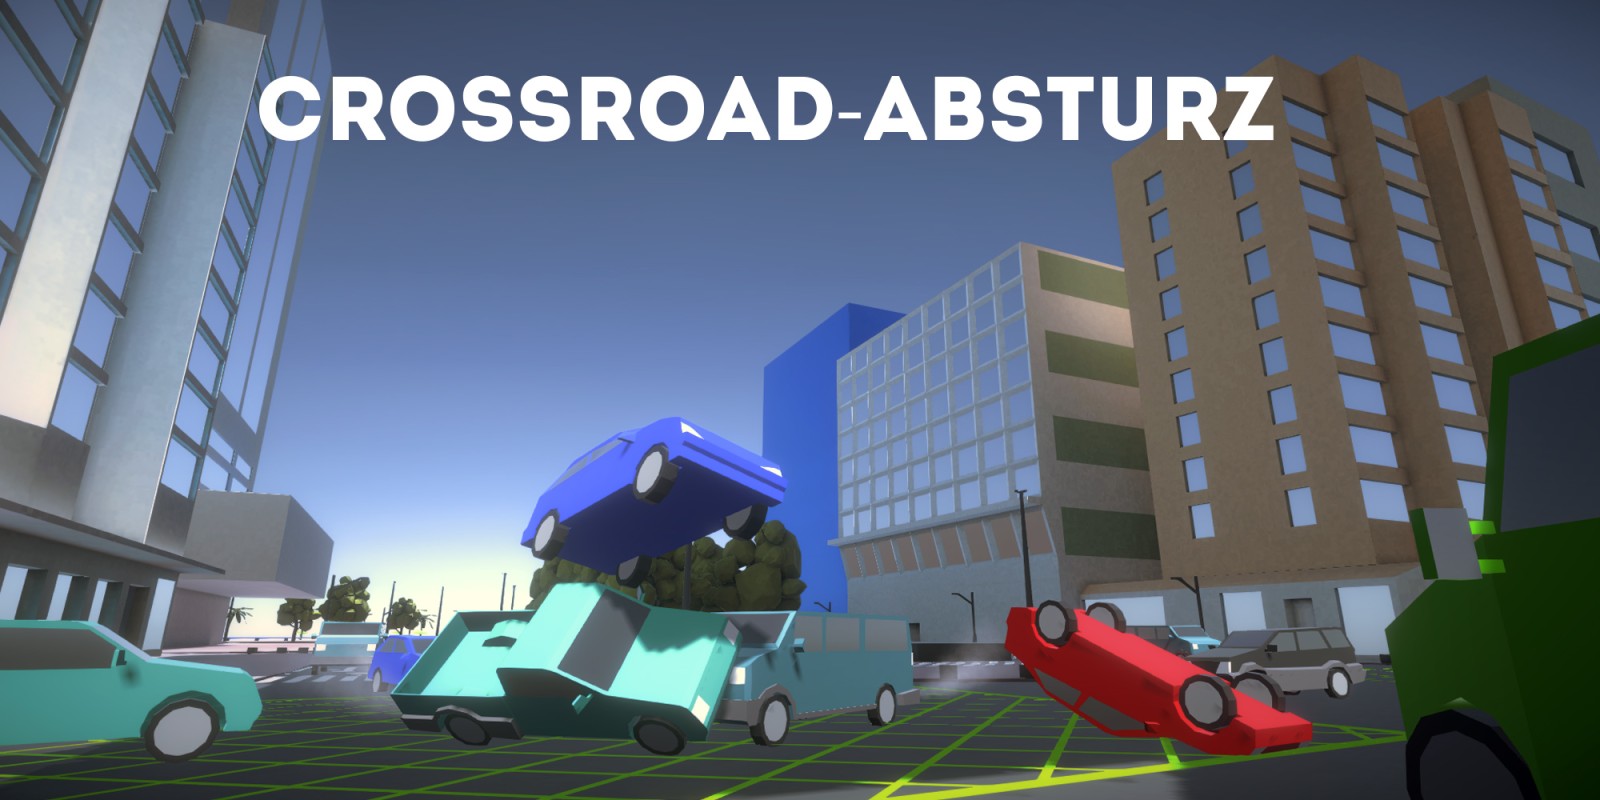 Crossroad-Absturz